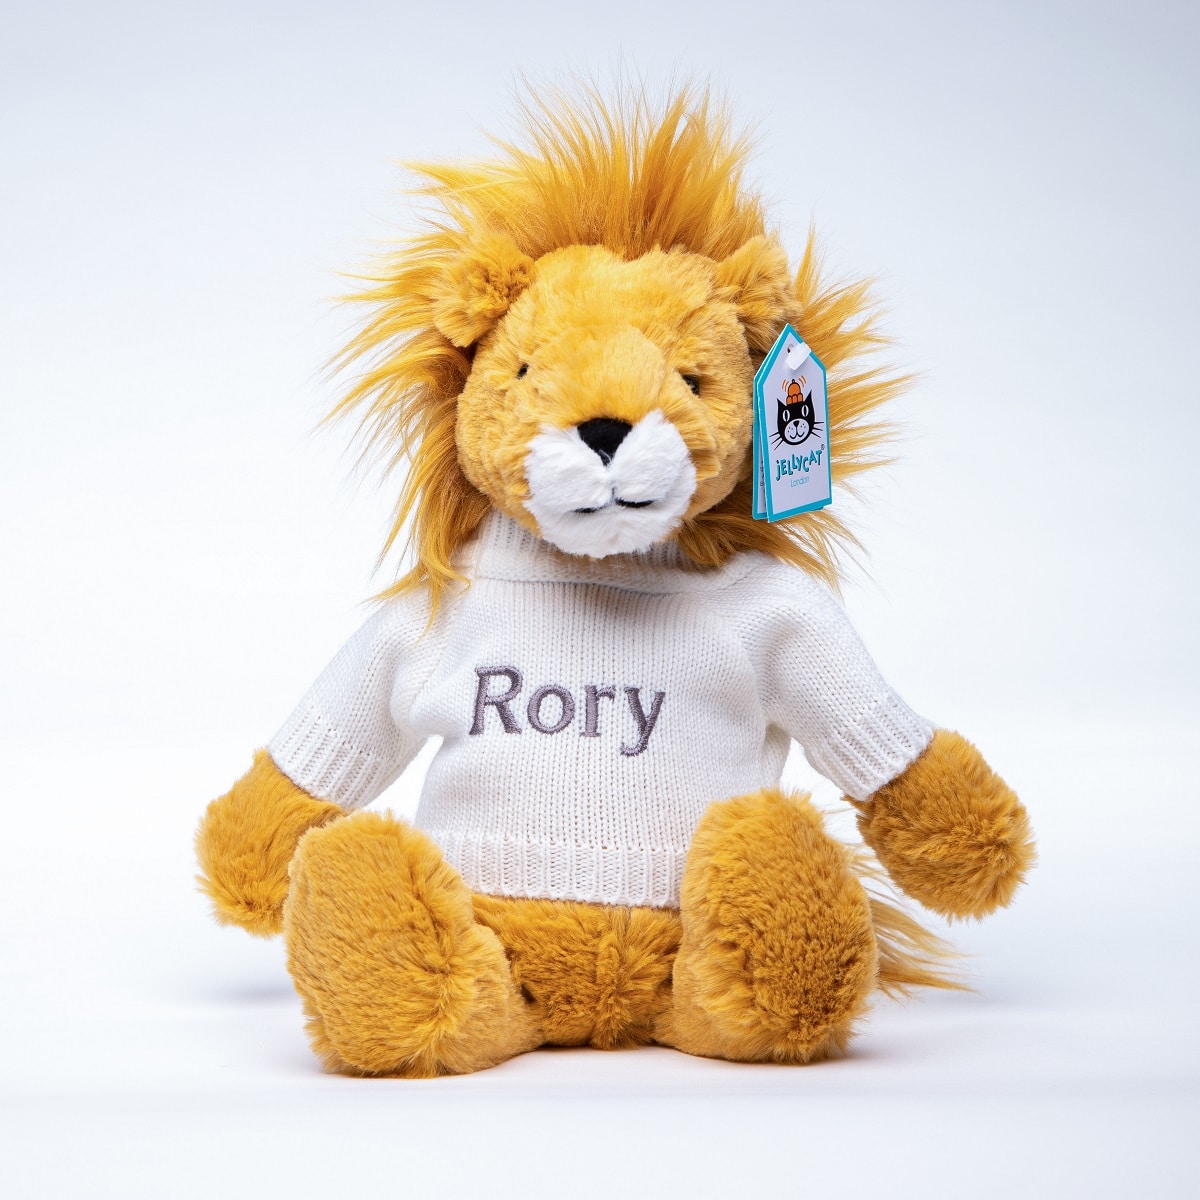 Personalised Jellycat bashful lion soft toy